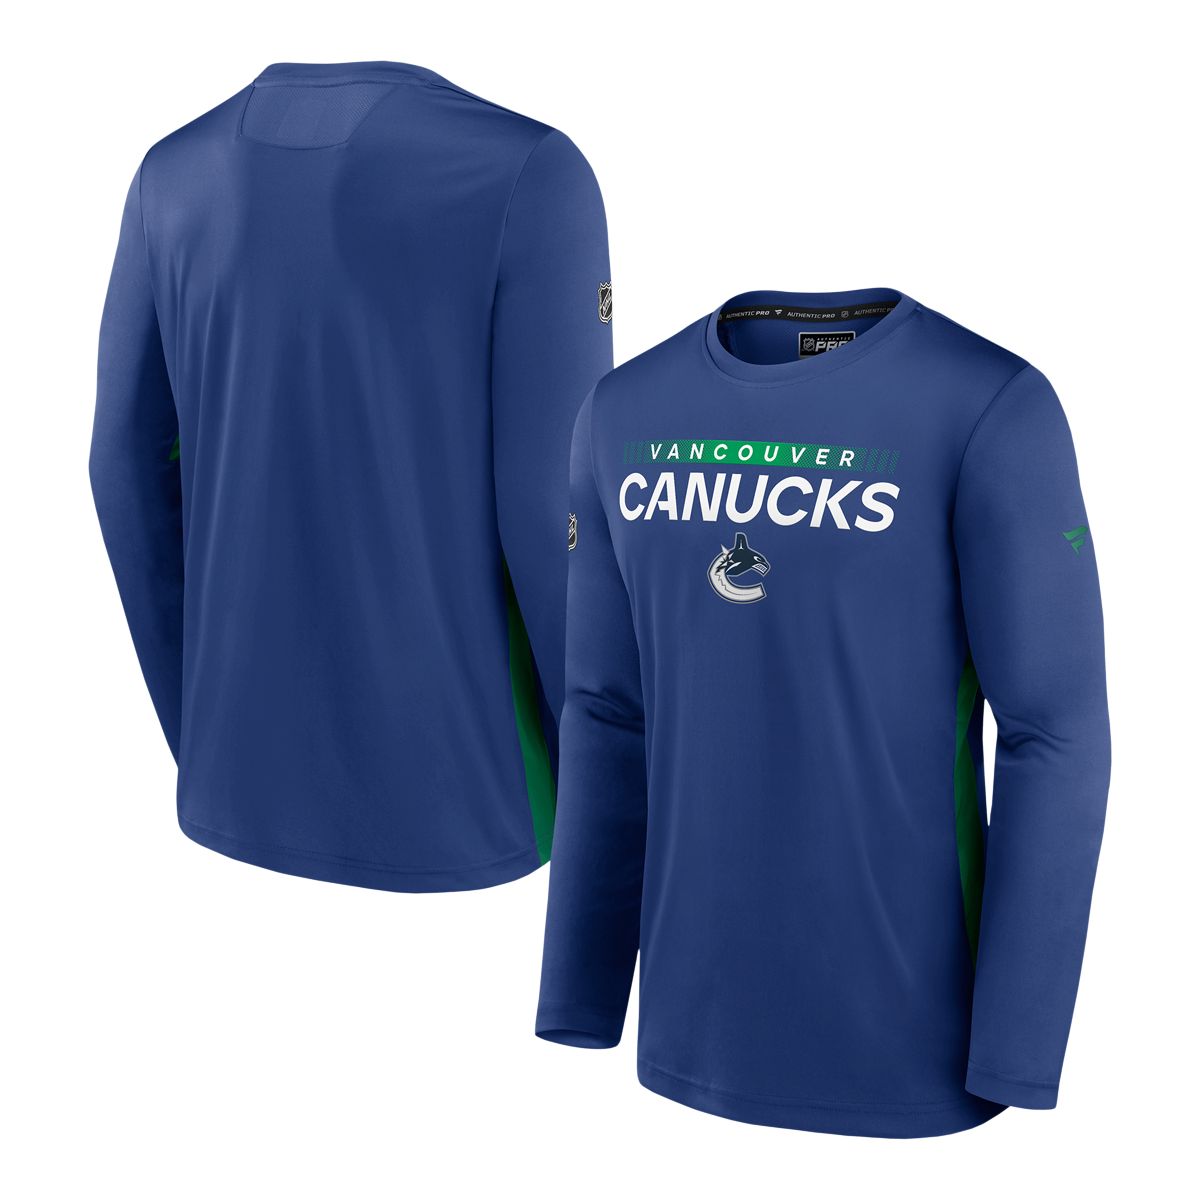 Vancouver Canucks Fanatics Authentic Pro Rink Tech T Shirt